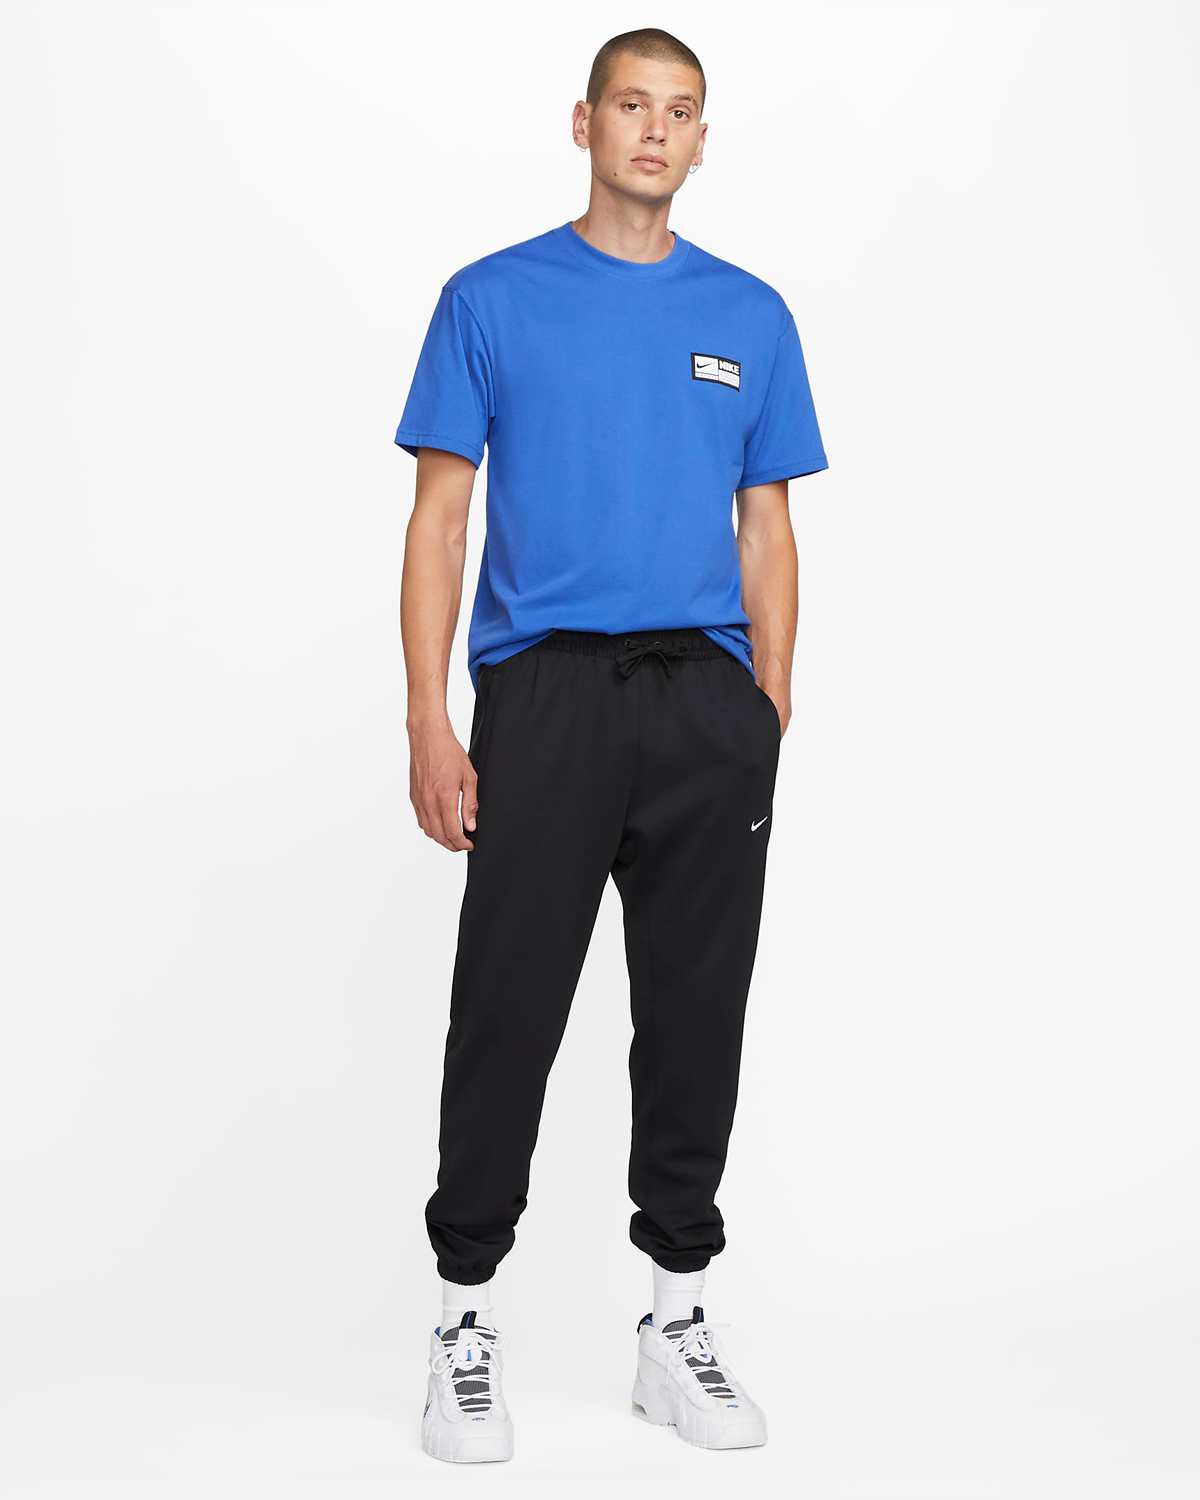 Nike-Basketball-Max90-T-Shirt-Game-Royal-Outfit